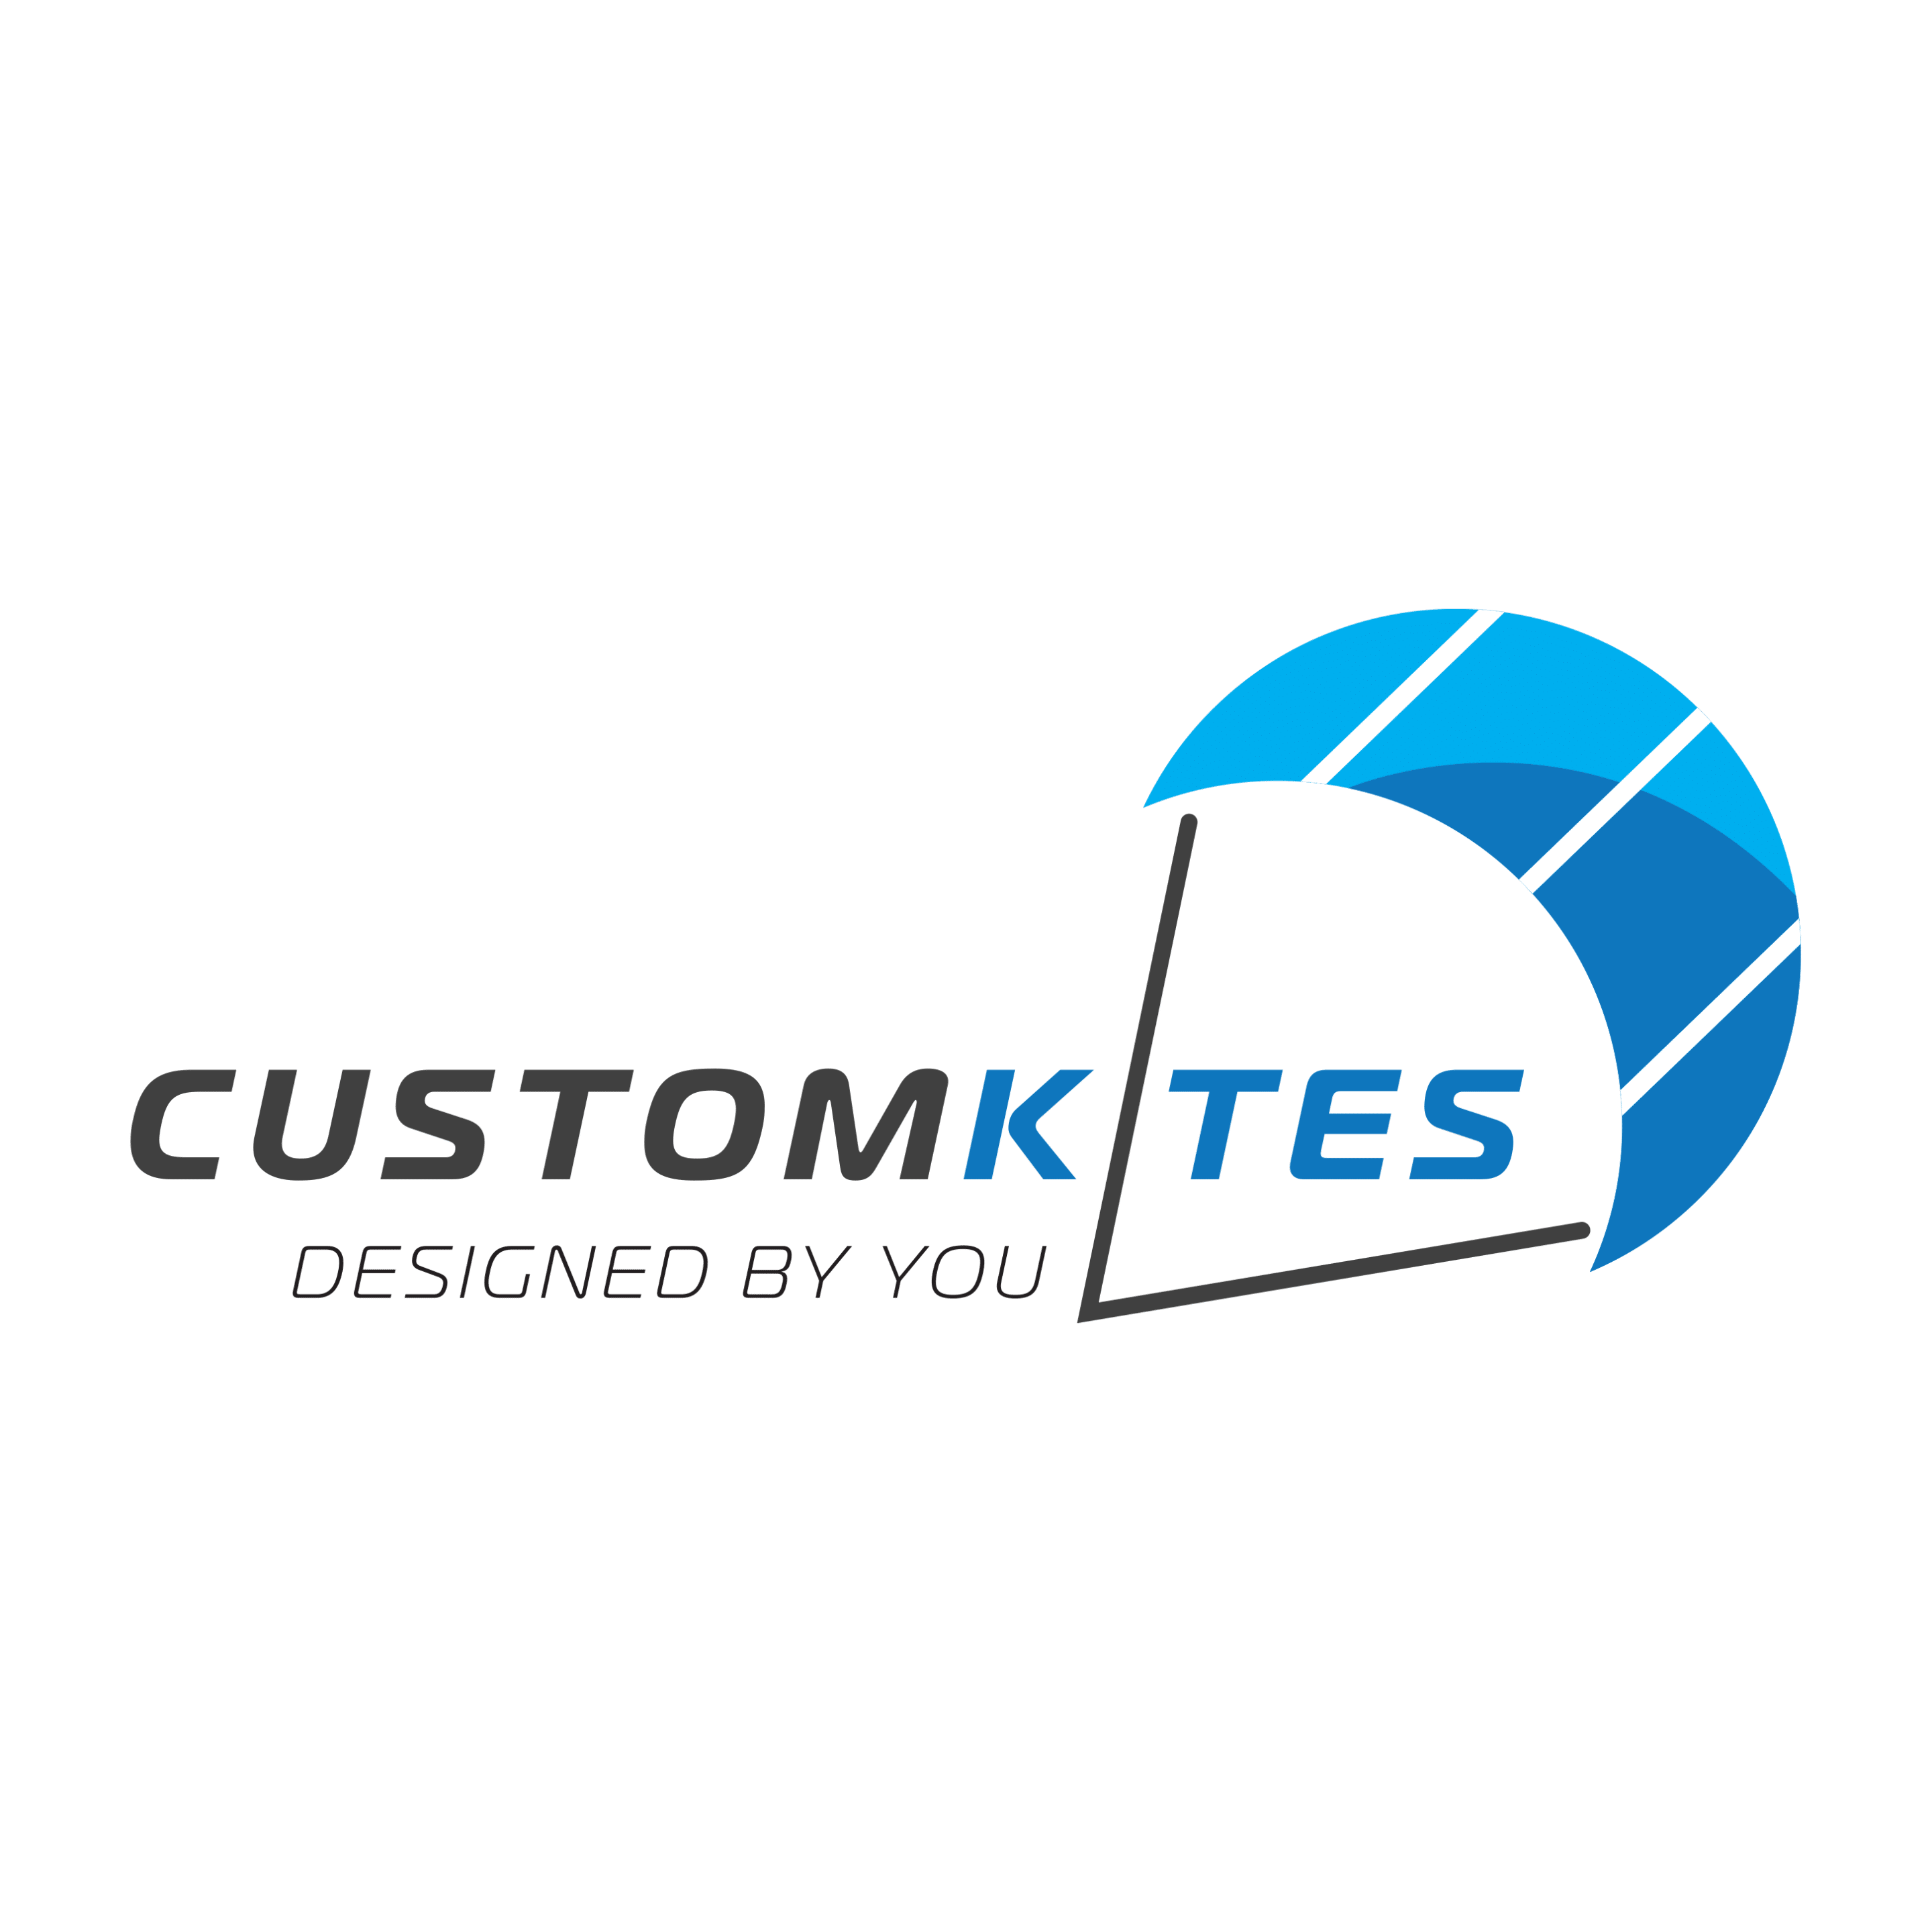 Logo CustomKites